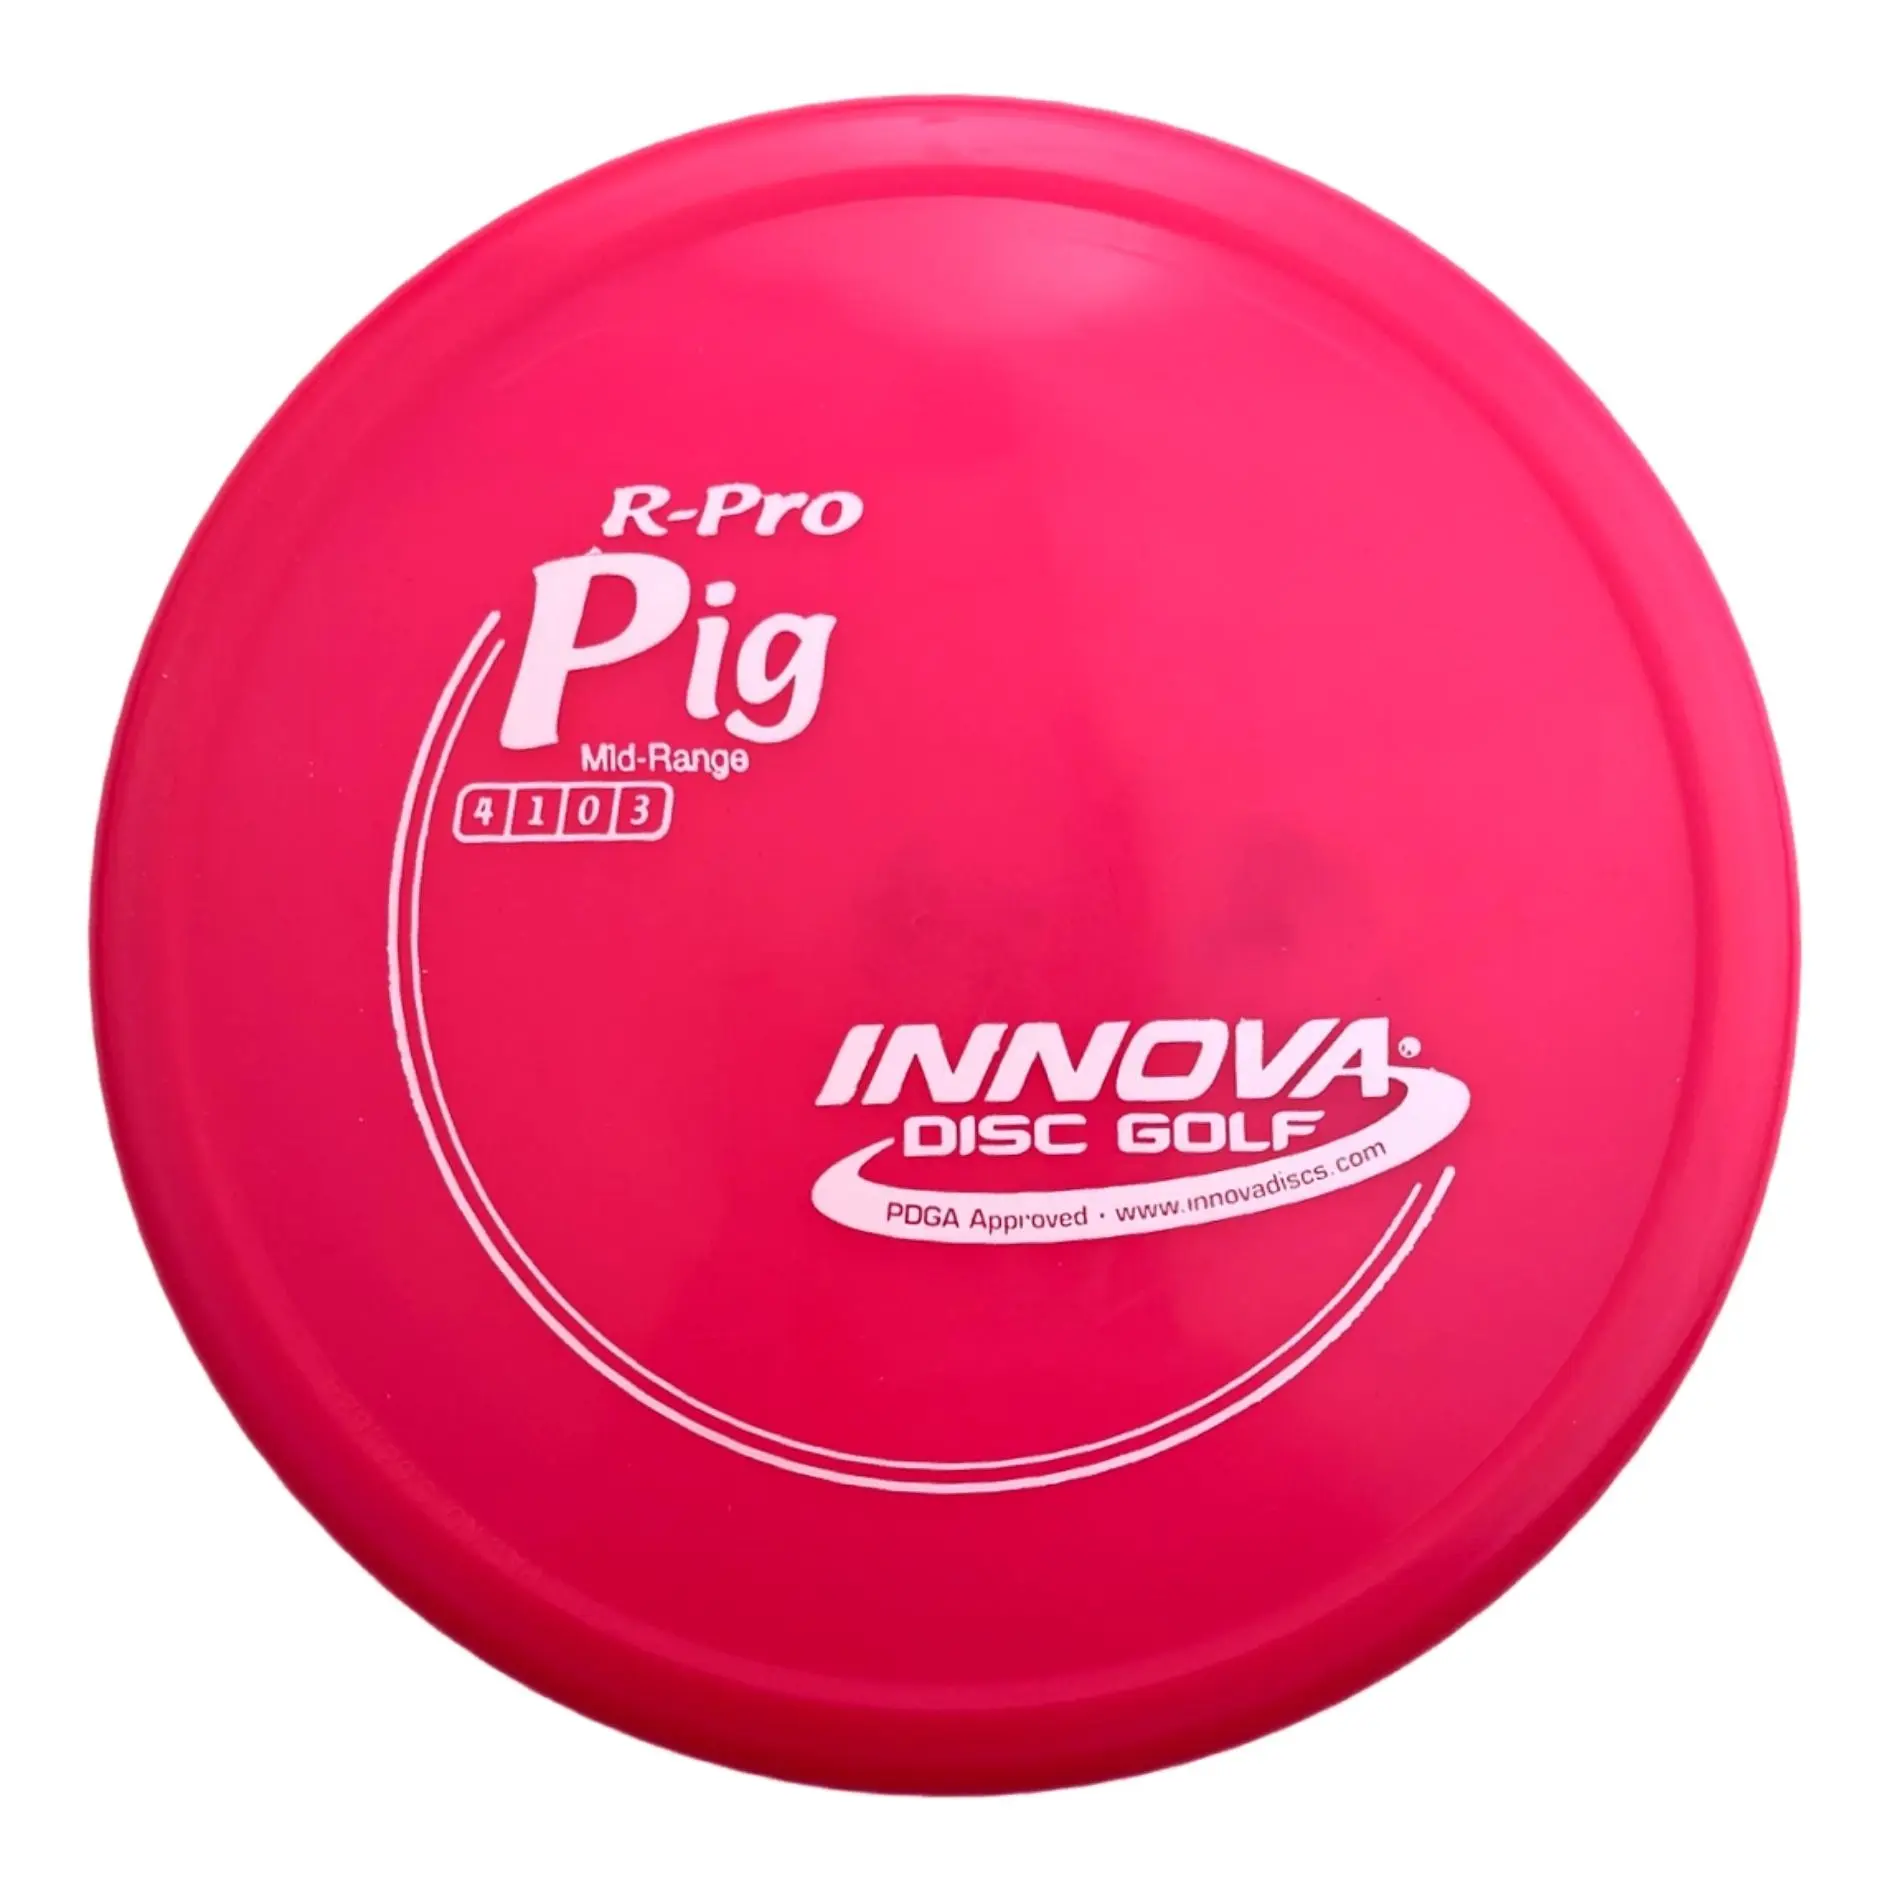 INNOVA R-Pro Pig Golf Disc Putter